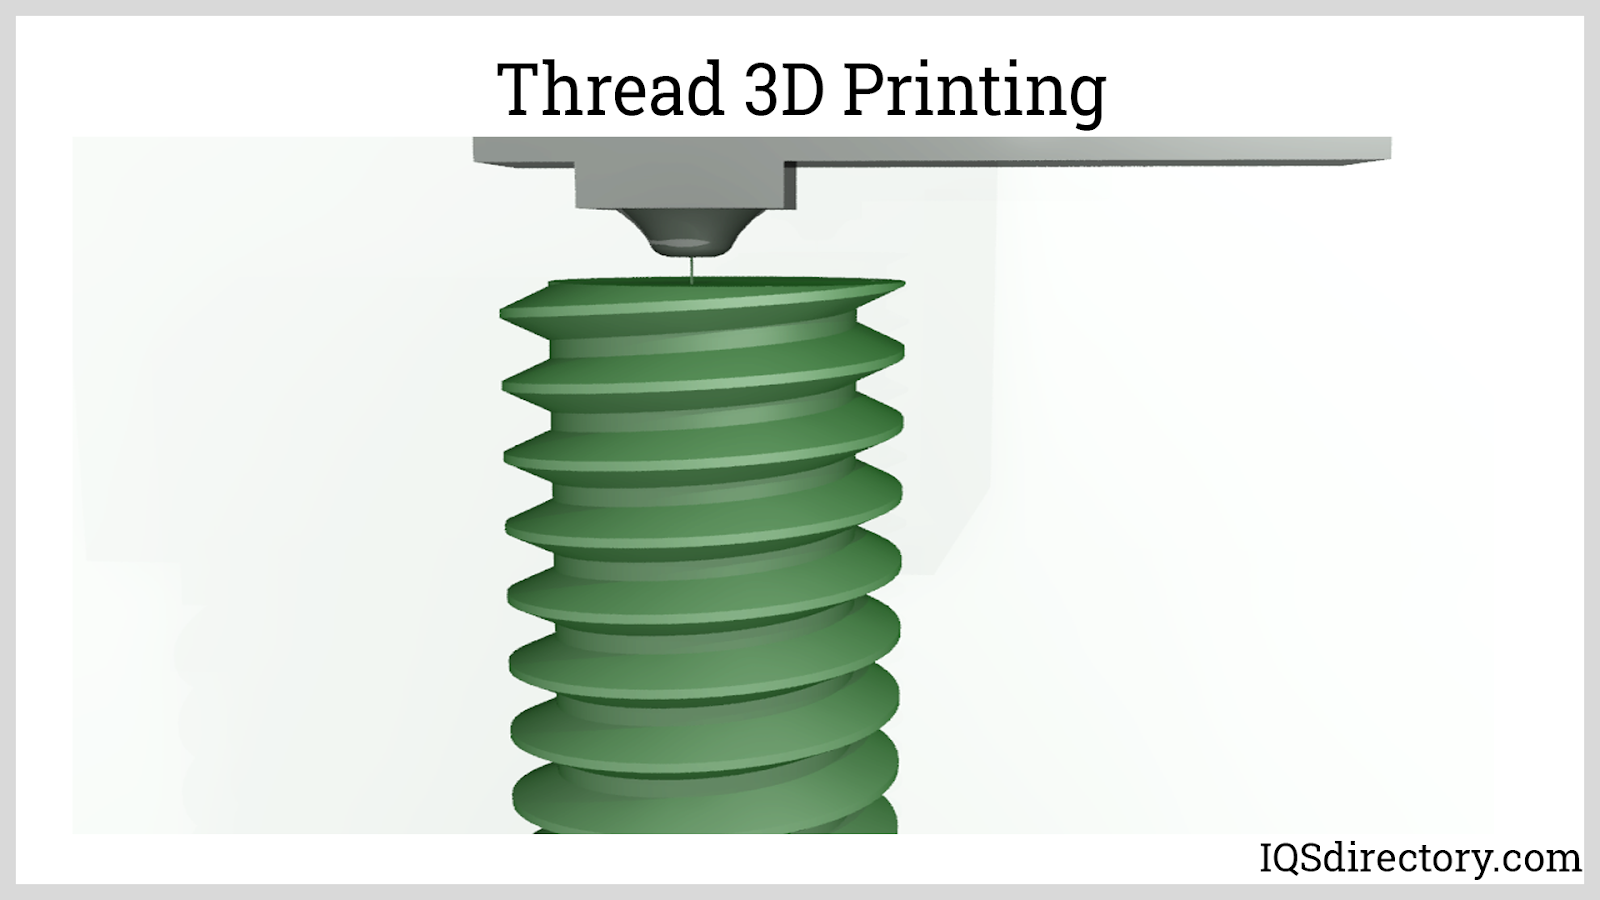 Thread 3D Printing